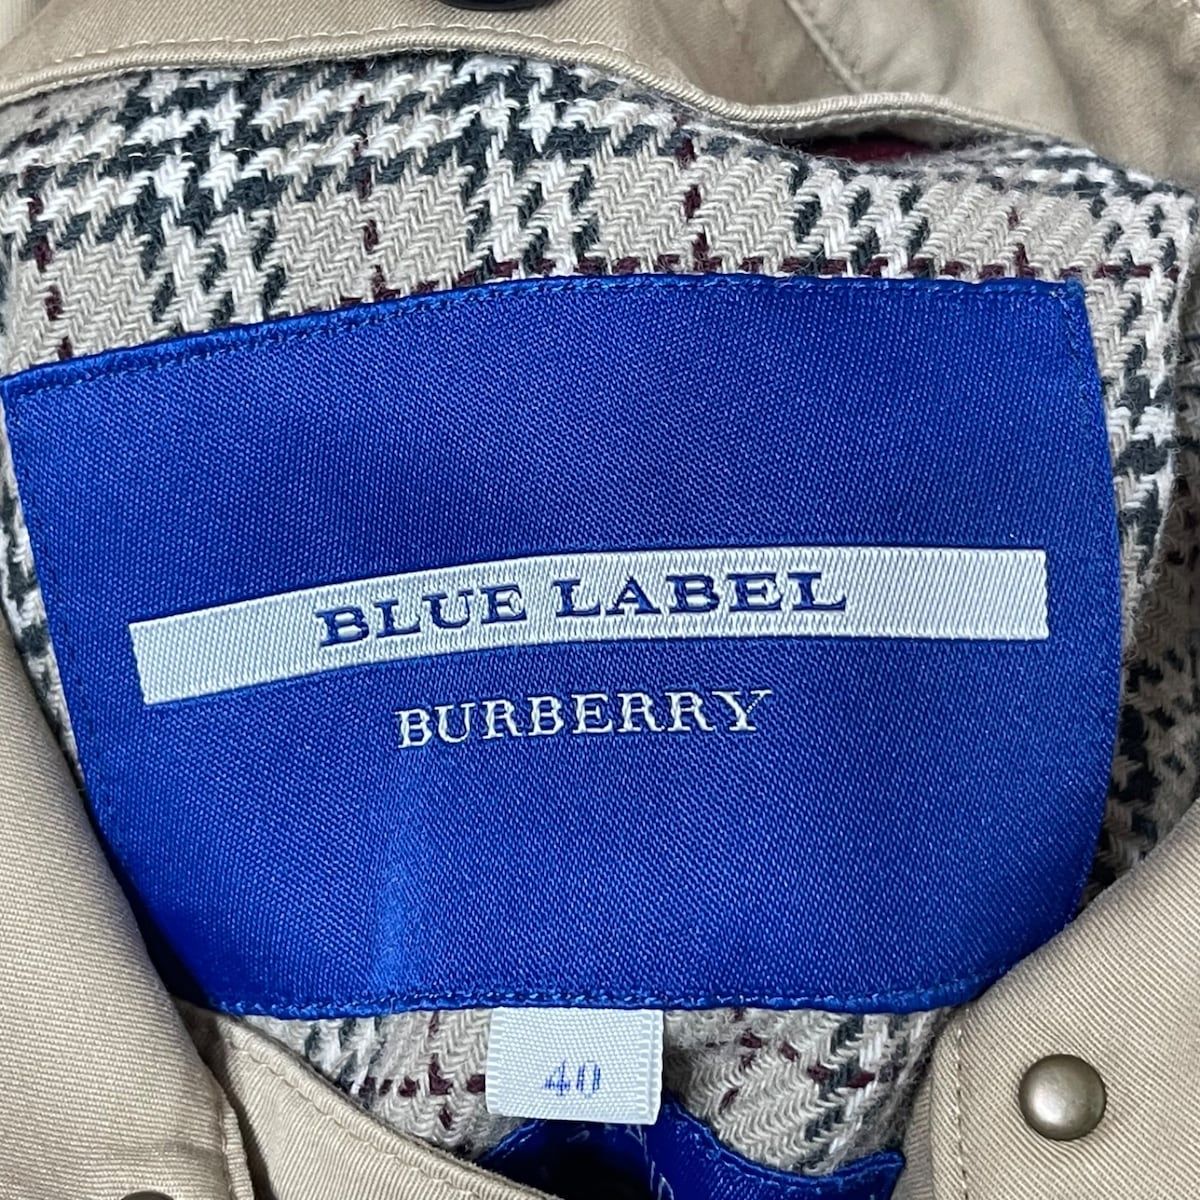 Burberry Blue Label(バーバリーブルーレーベル) トレンチコート ...